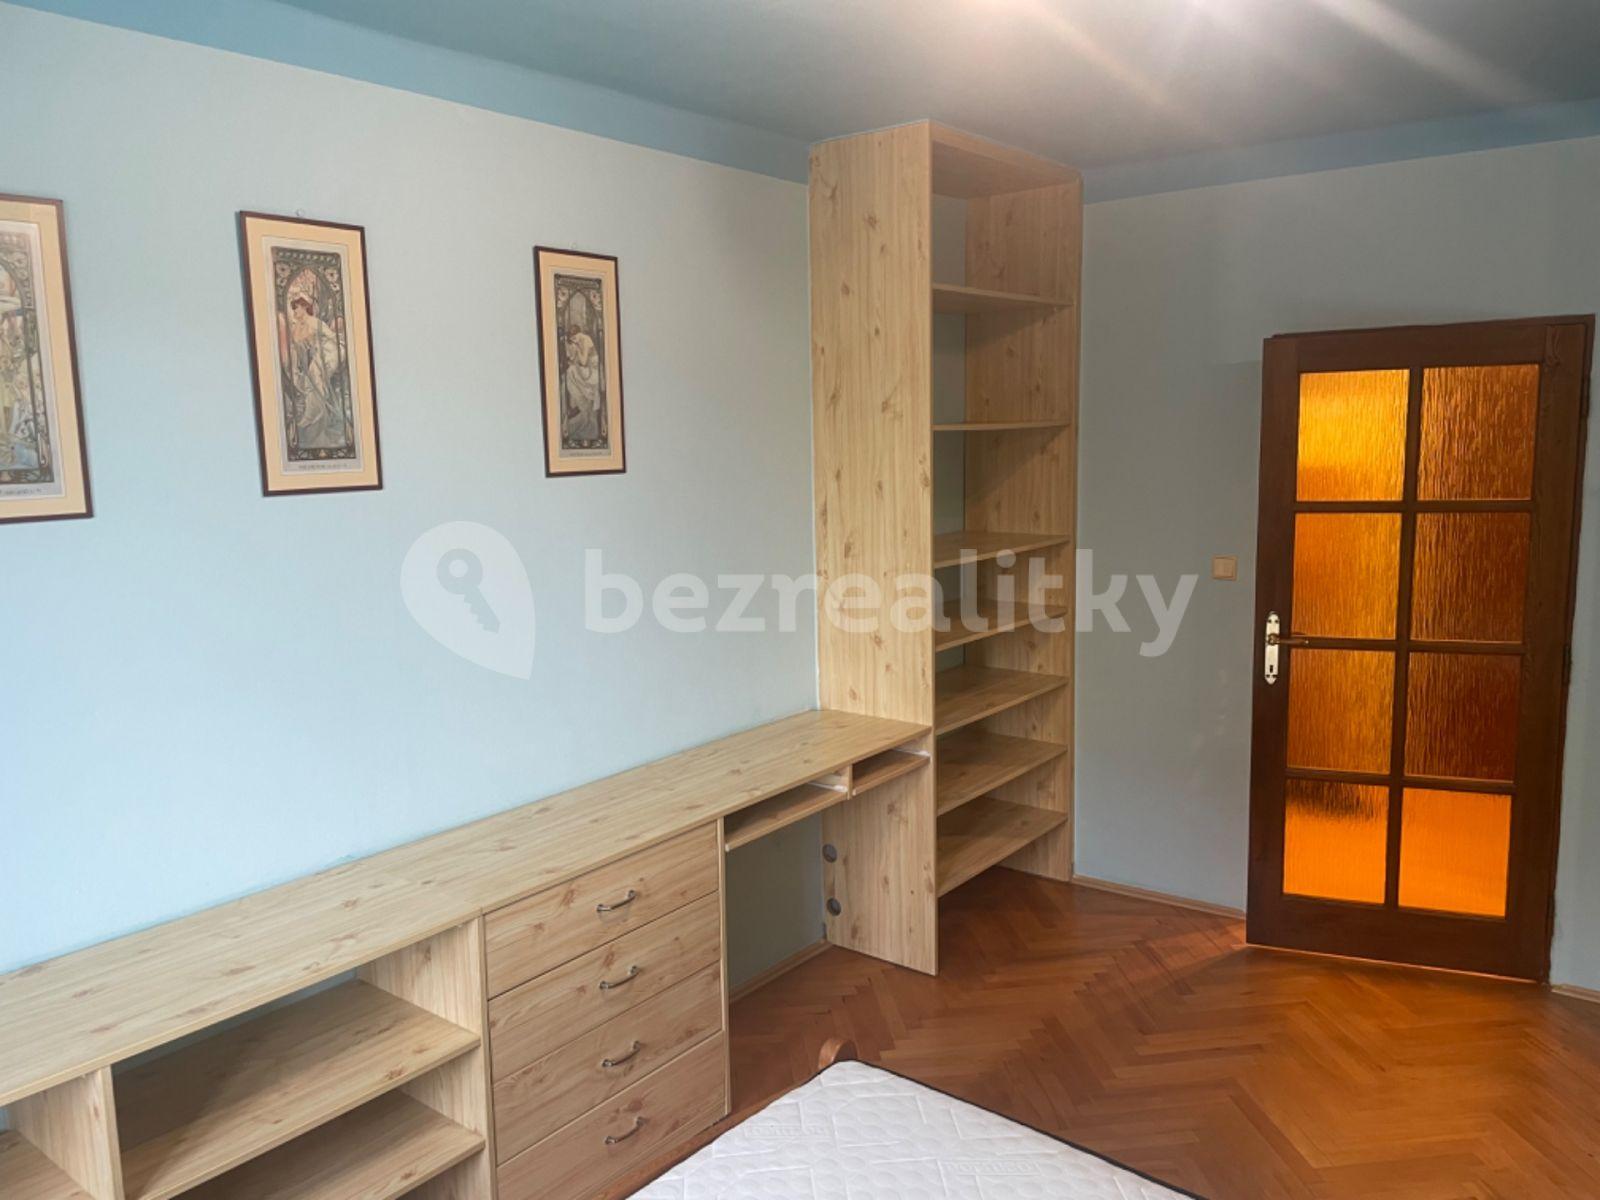 2 bedroom flat for sale, 56 m², Dvouletky, Prague, Prague